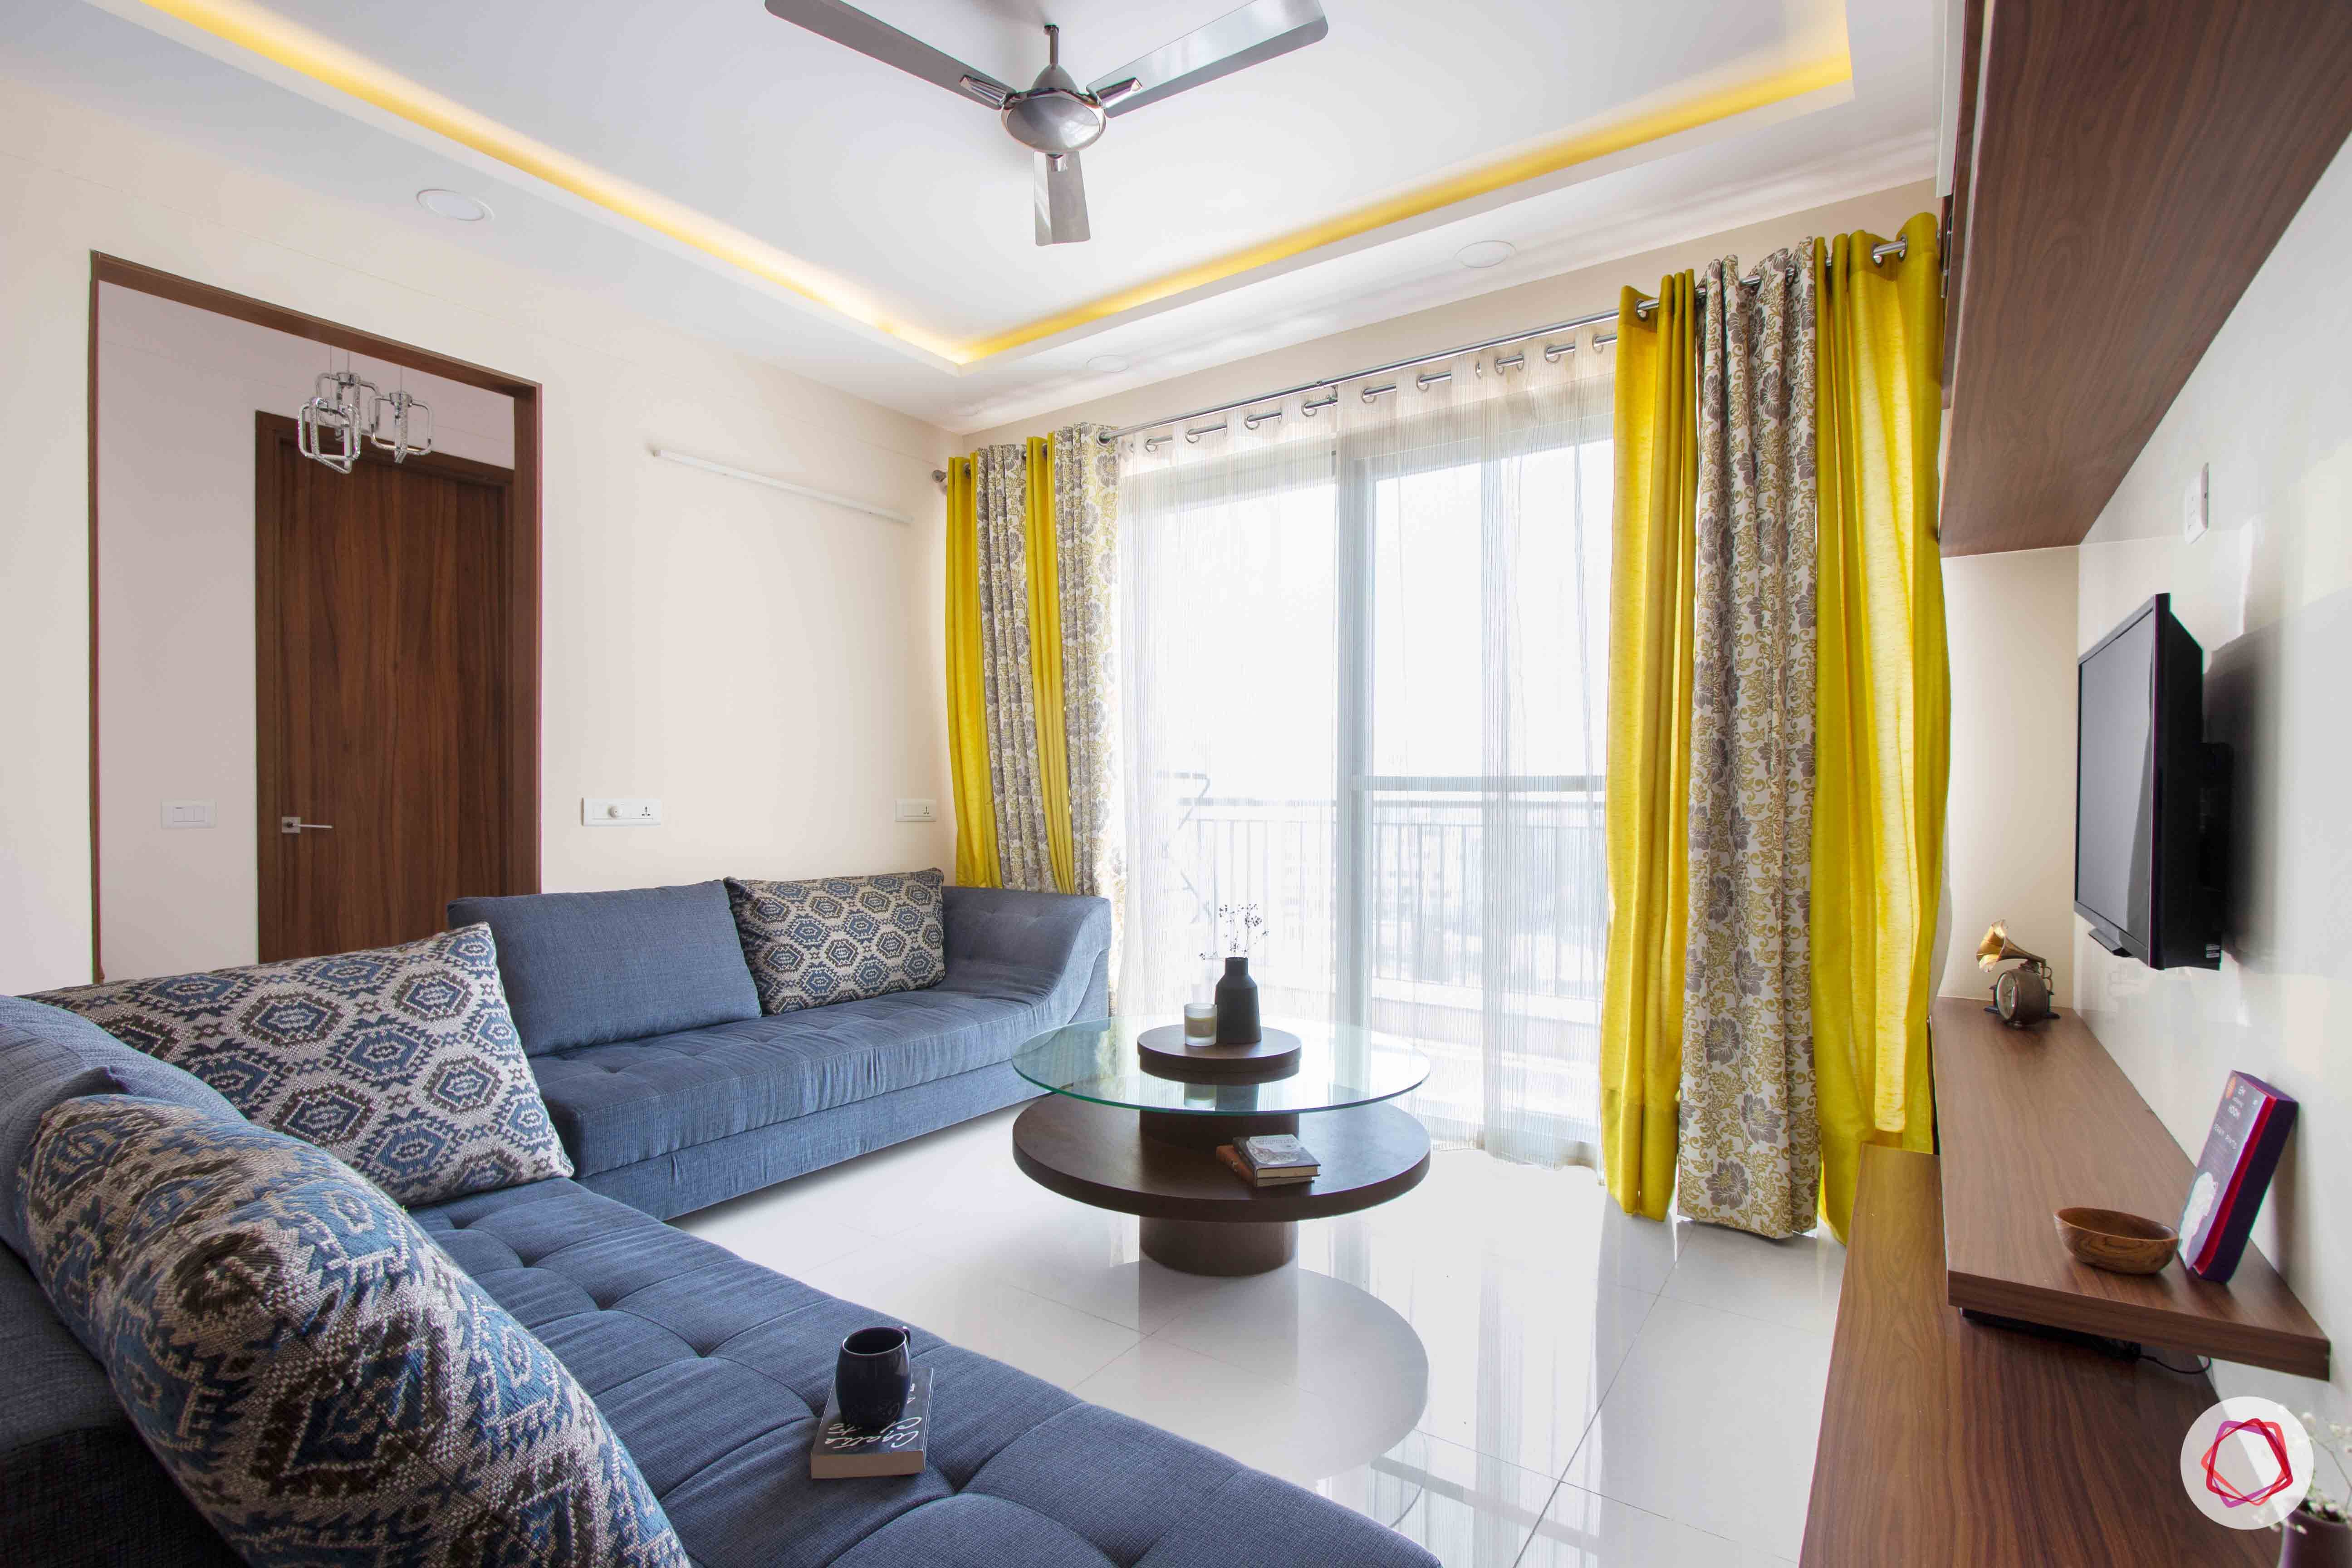 snn raj greenbay-living room-balcony-layered drapes